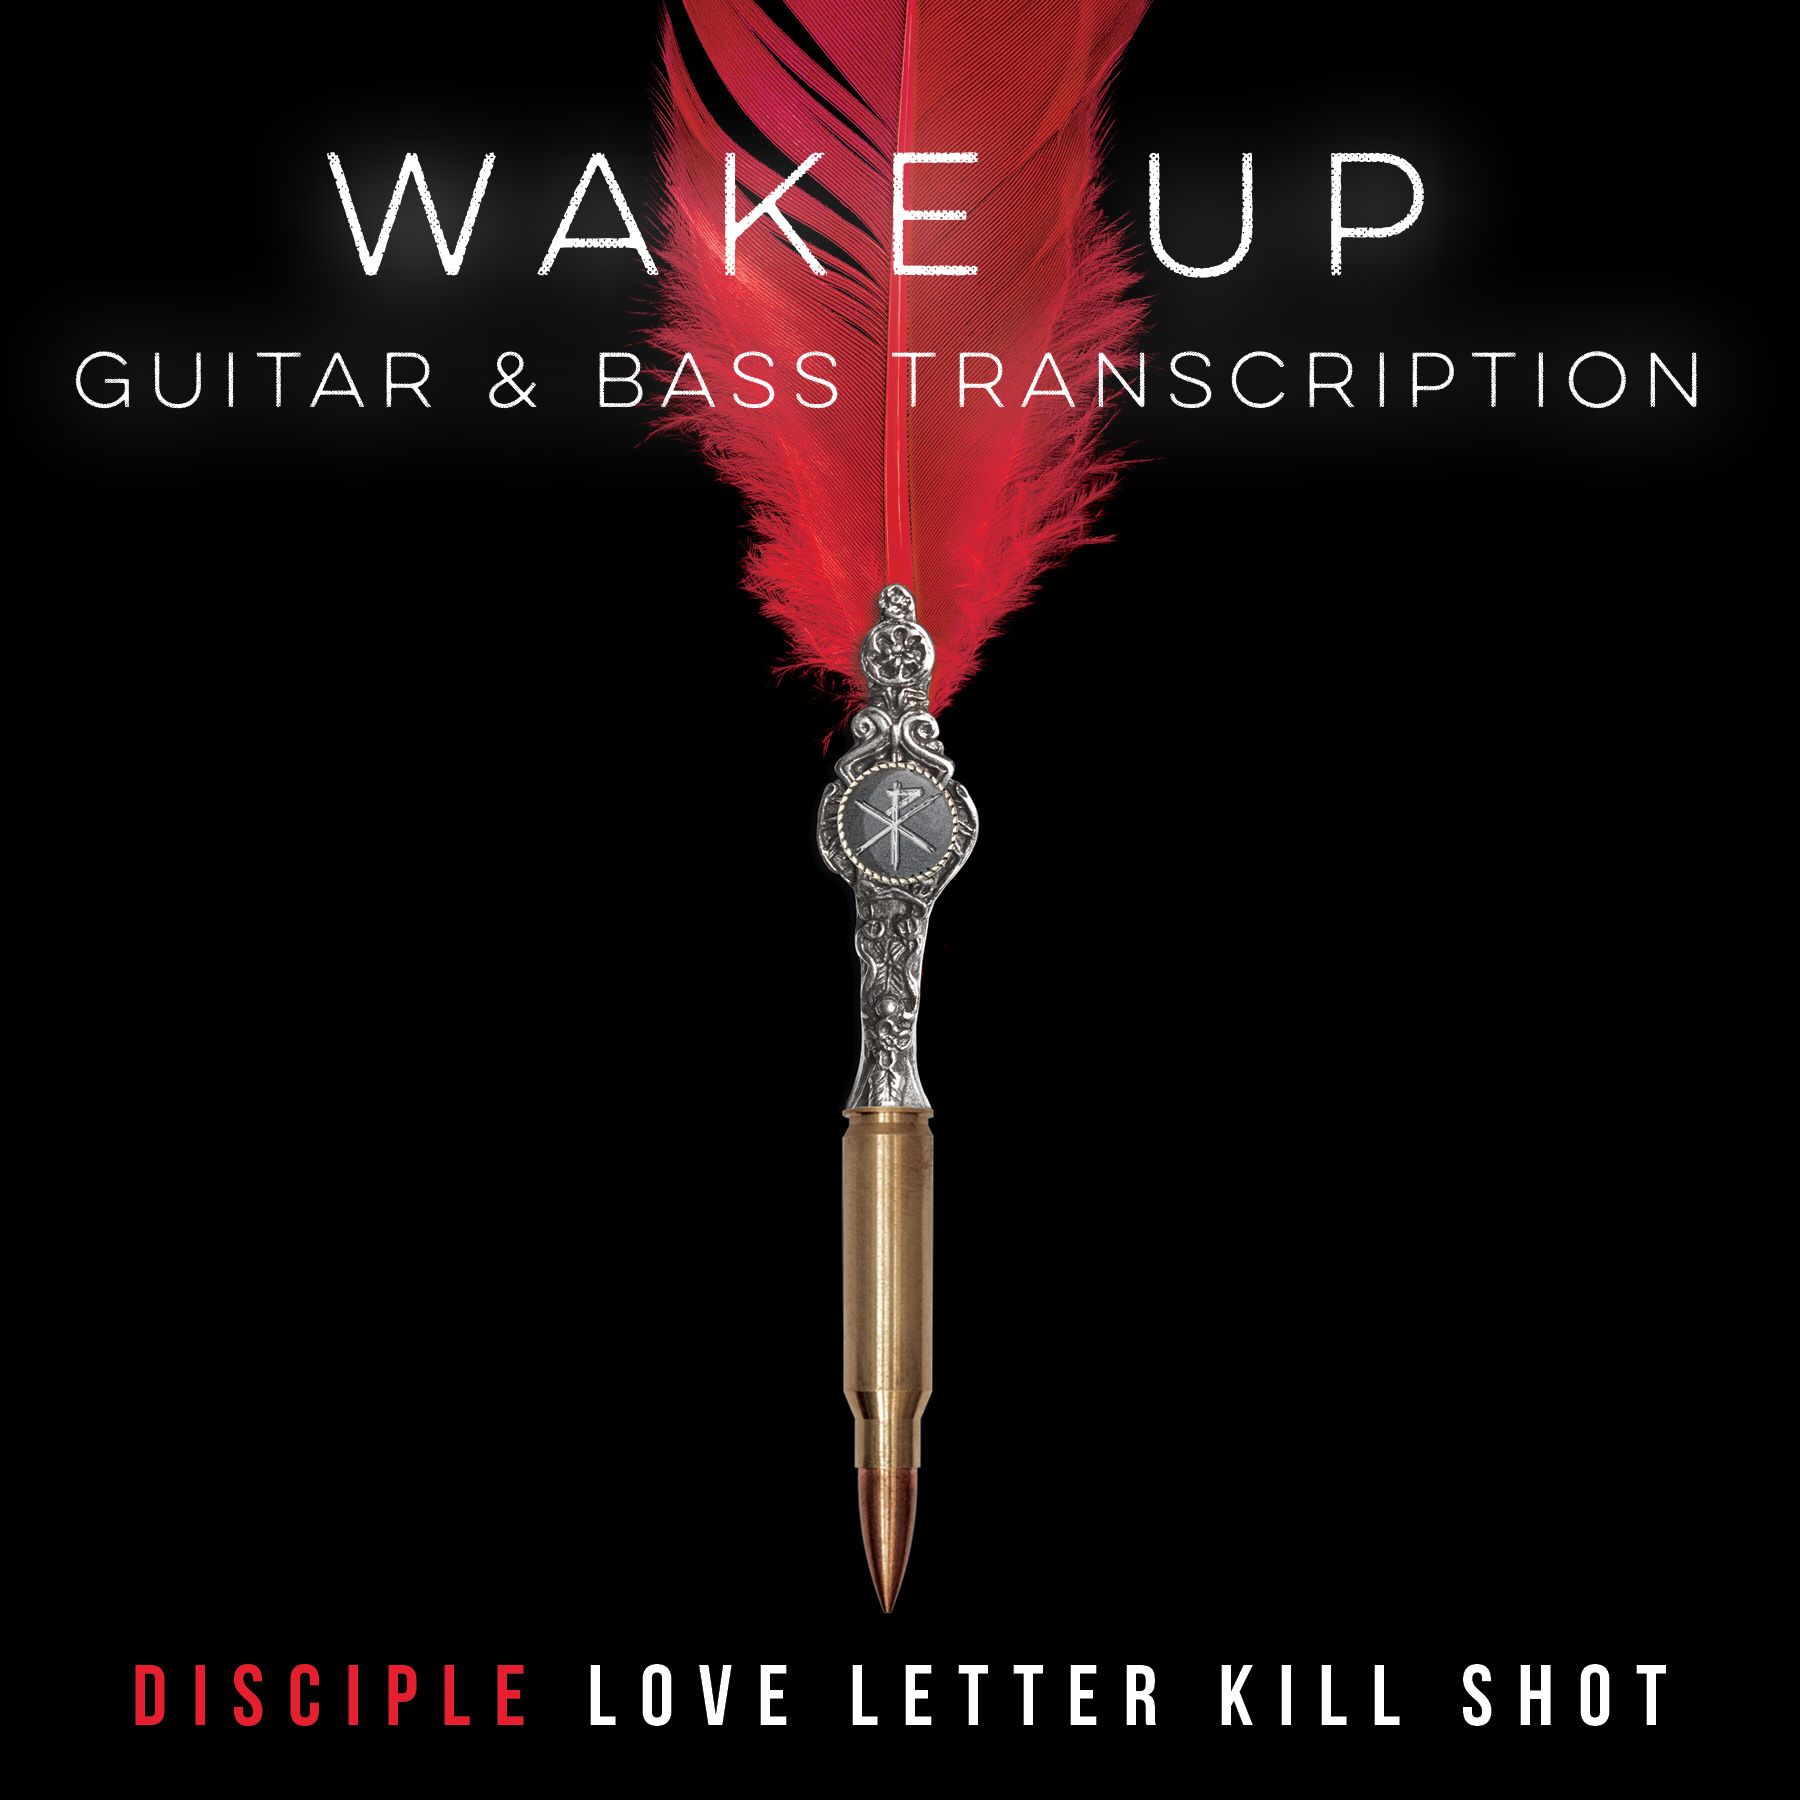 Wake Up - Guitar & Bass TAB Download